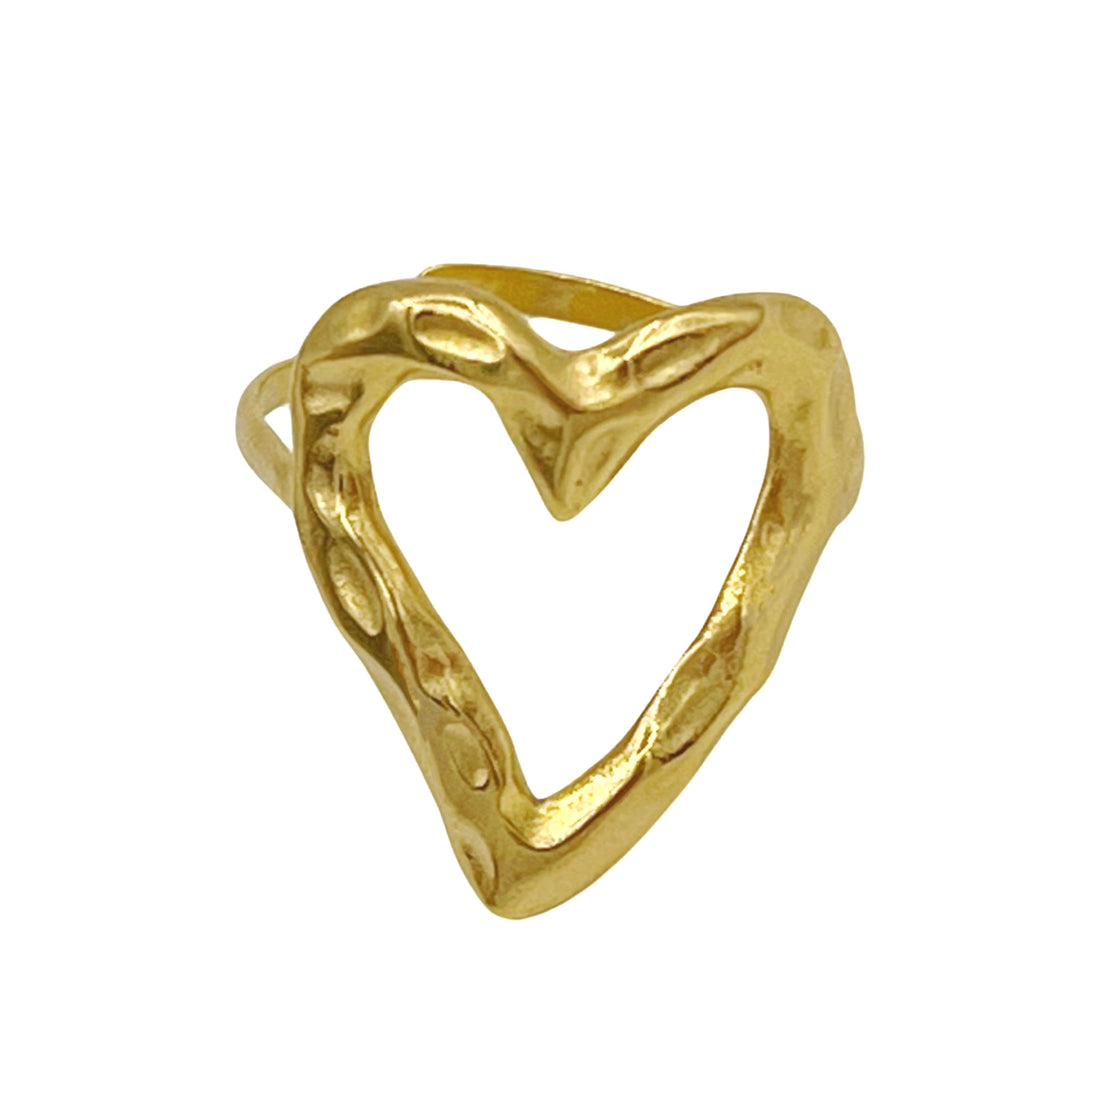 heartbreaker ring - goud